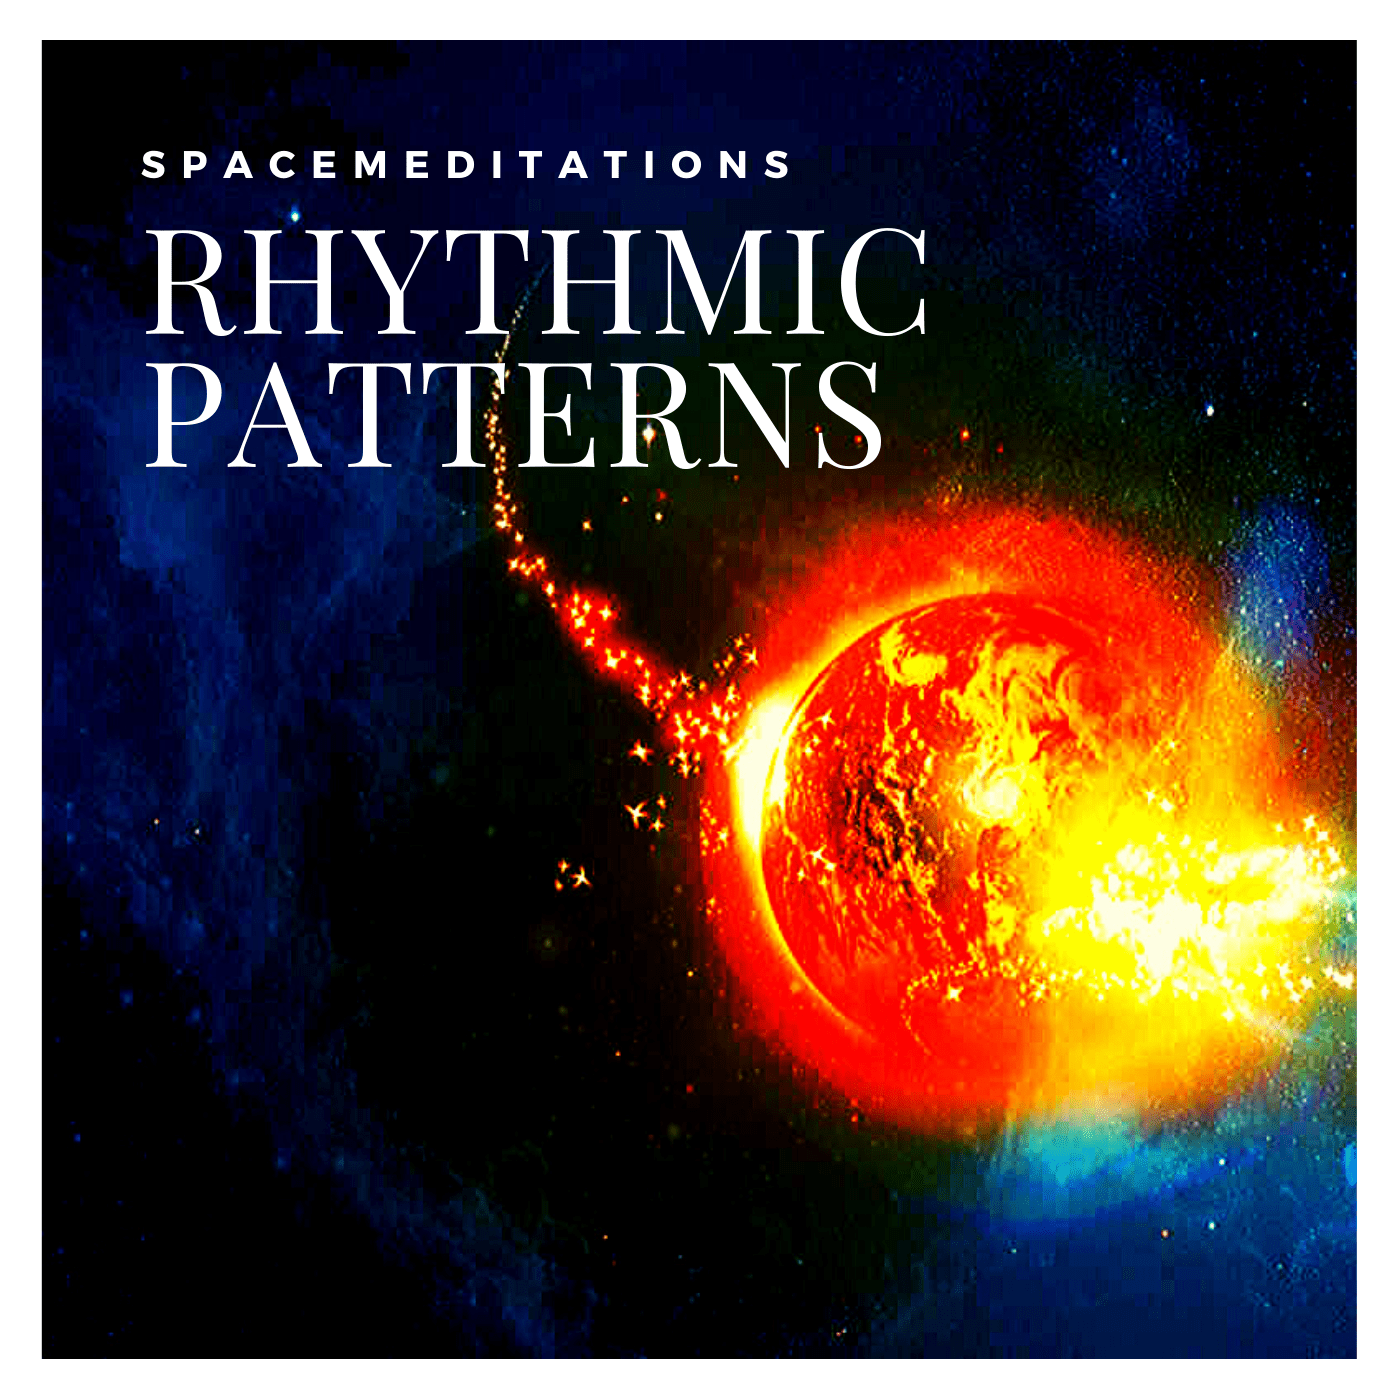 Rhythmic patterns. Spacemeditations